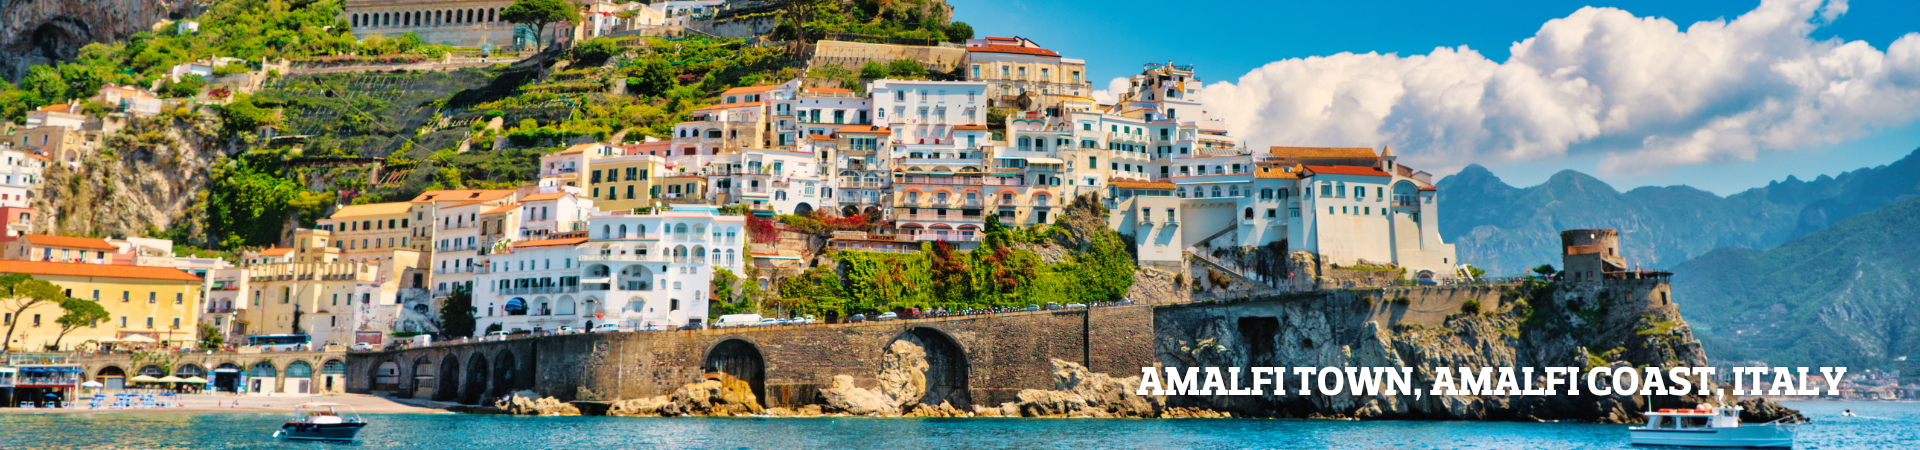 Prettiest village in Europe - Amalfi, Amalfi Coast, Italy